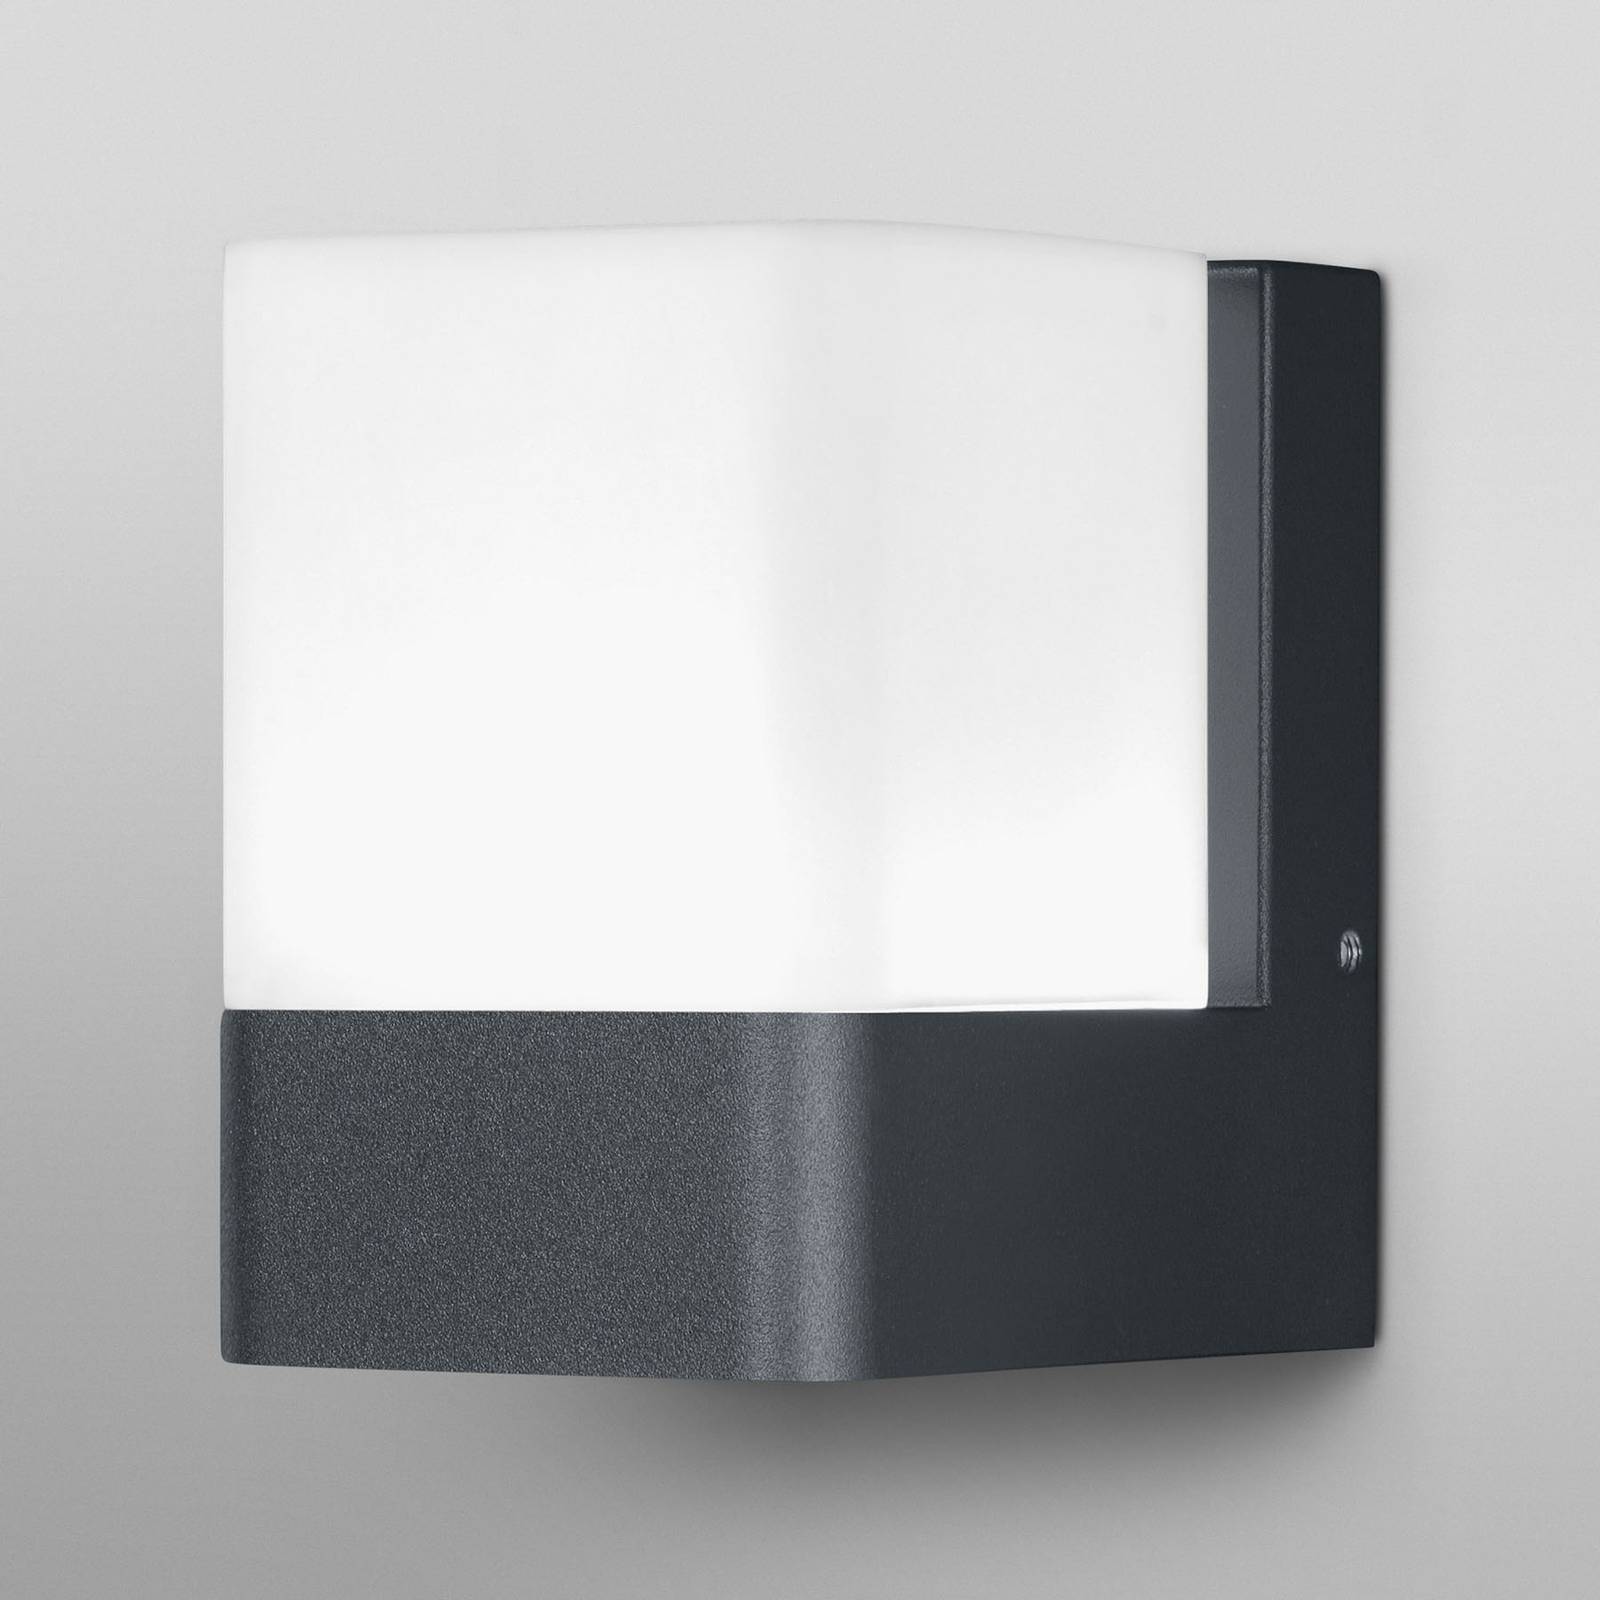 LEDVANCE SMART+ WiFi Cube applique LED RGBW up